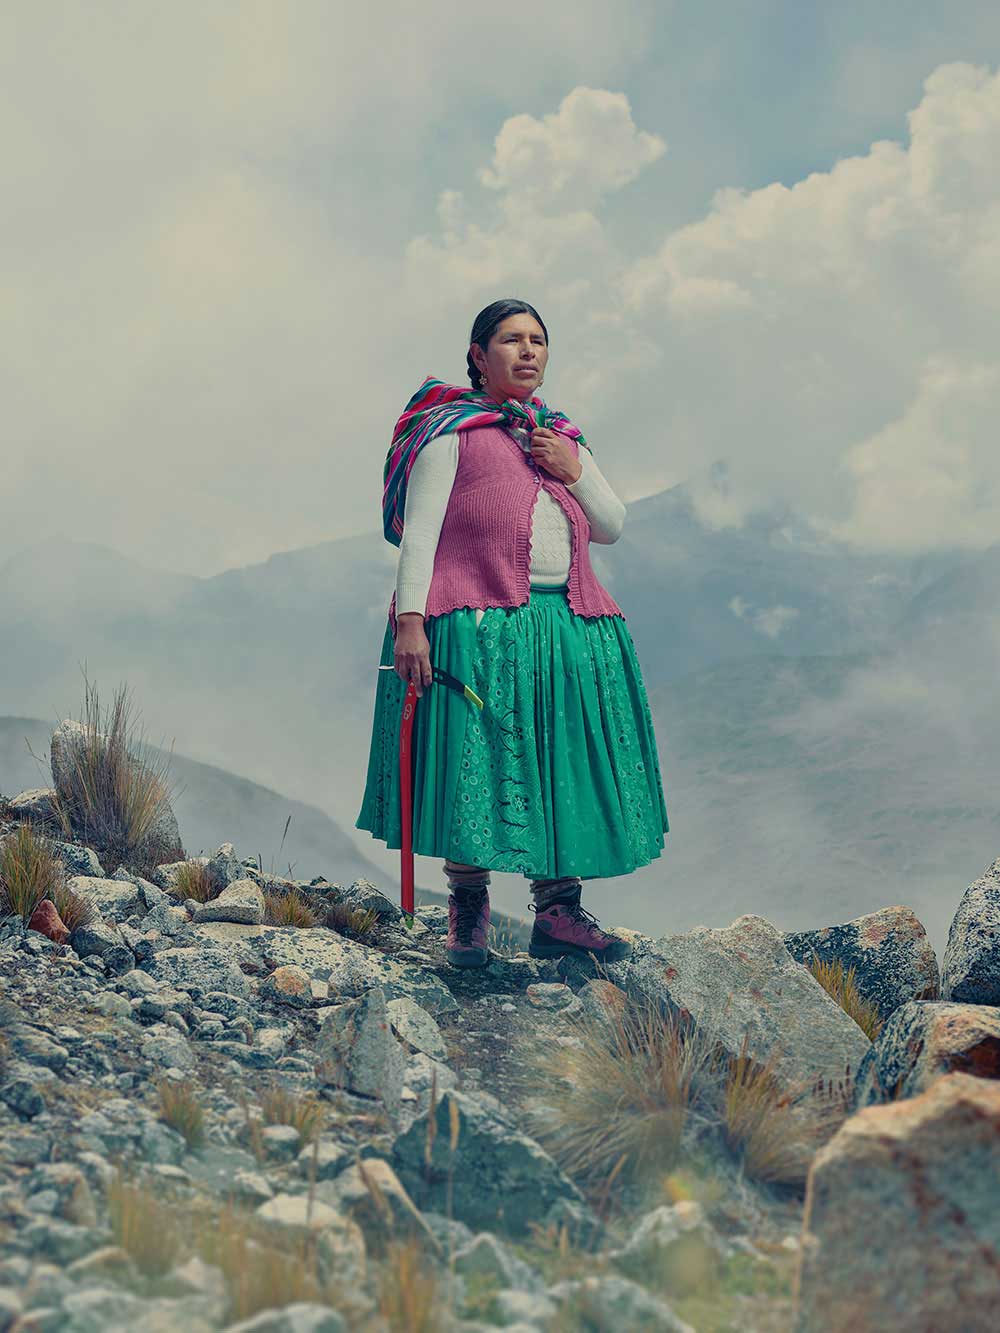 Climbing Cholitas | Todd Antony